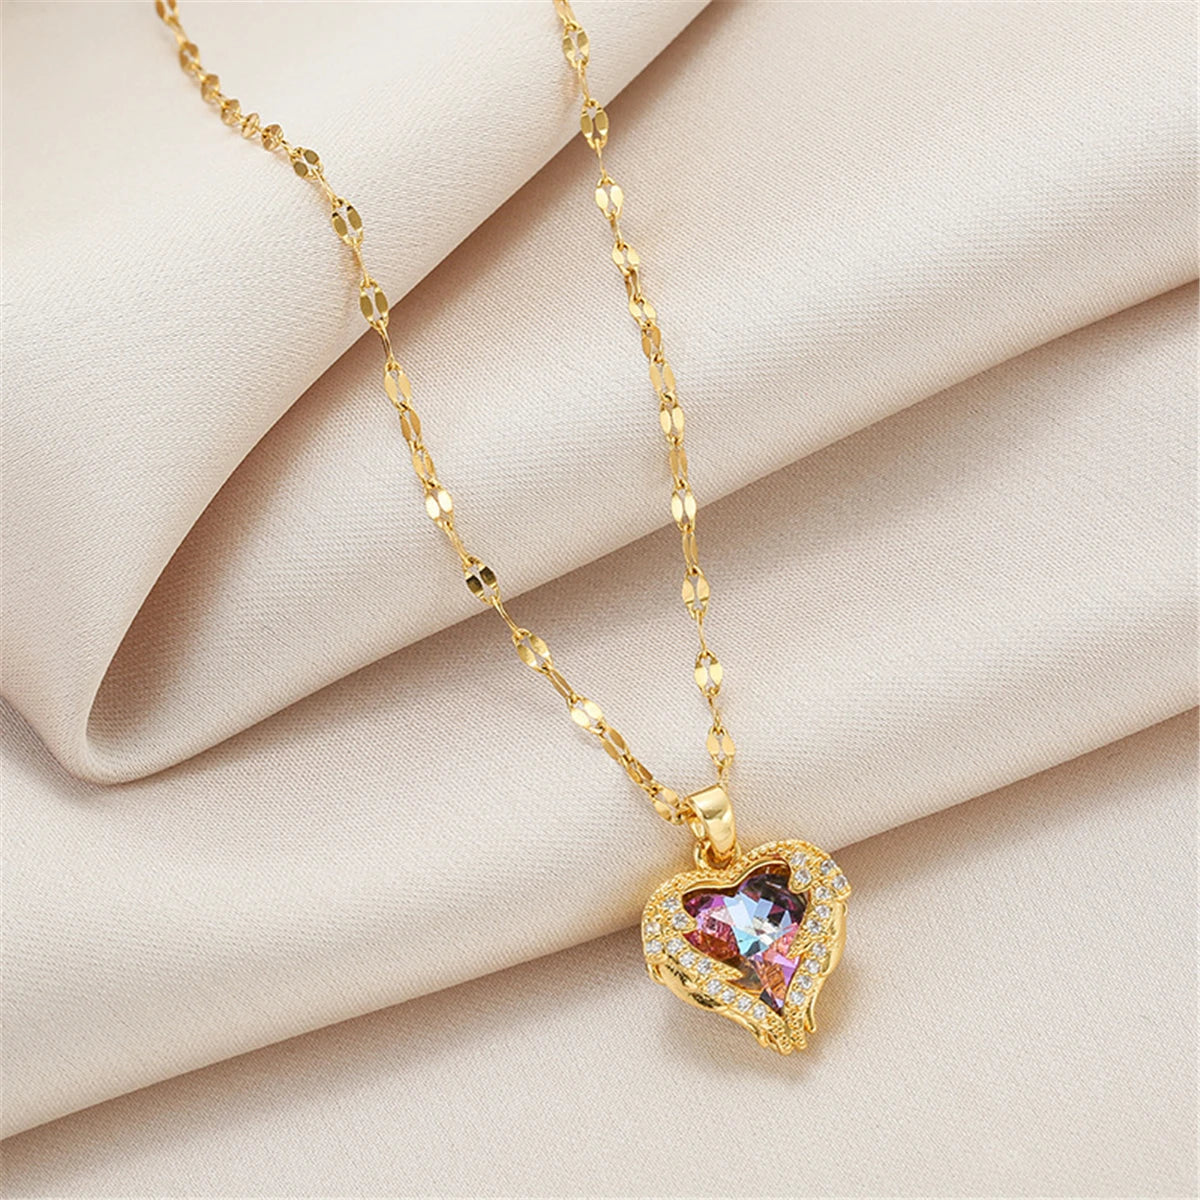 Luxury Crystal Ocean Heart Pendant Necklace For Women